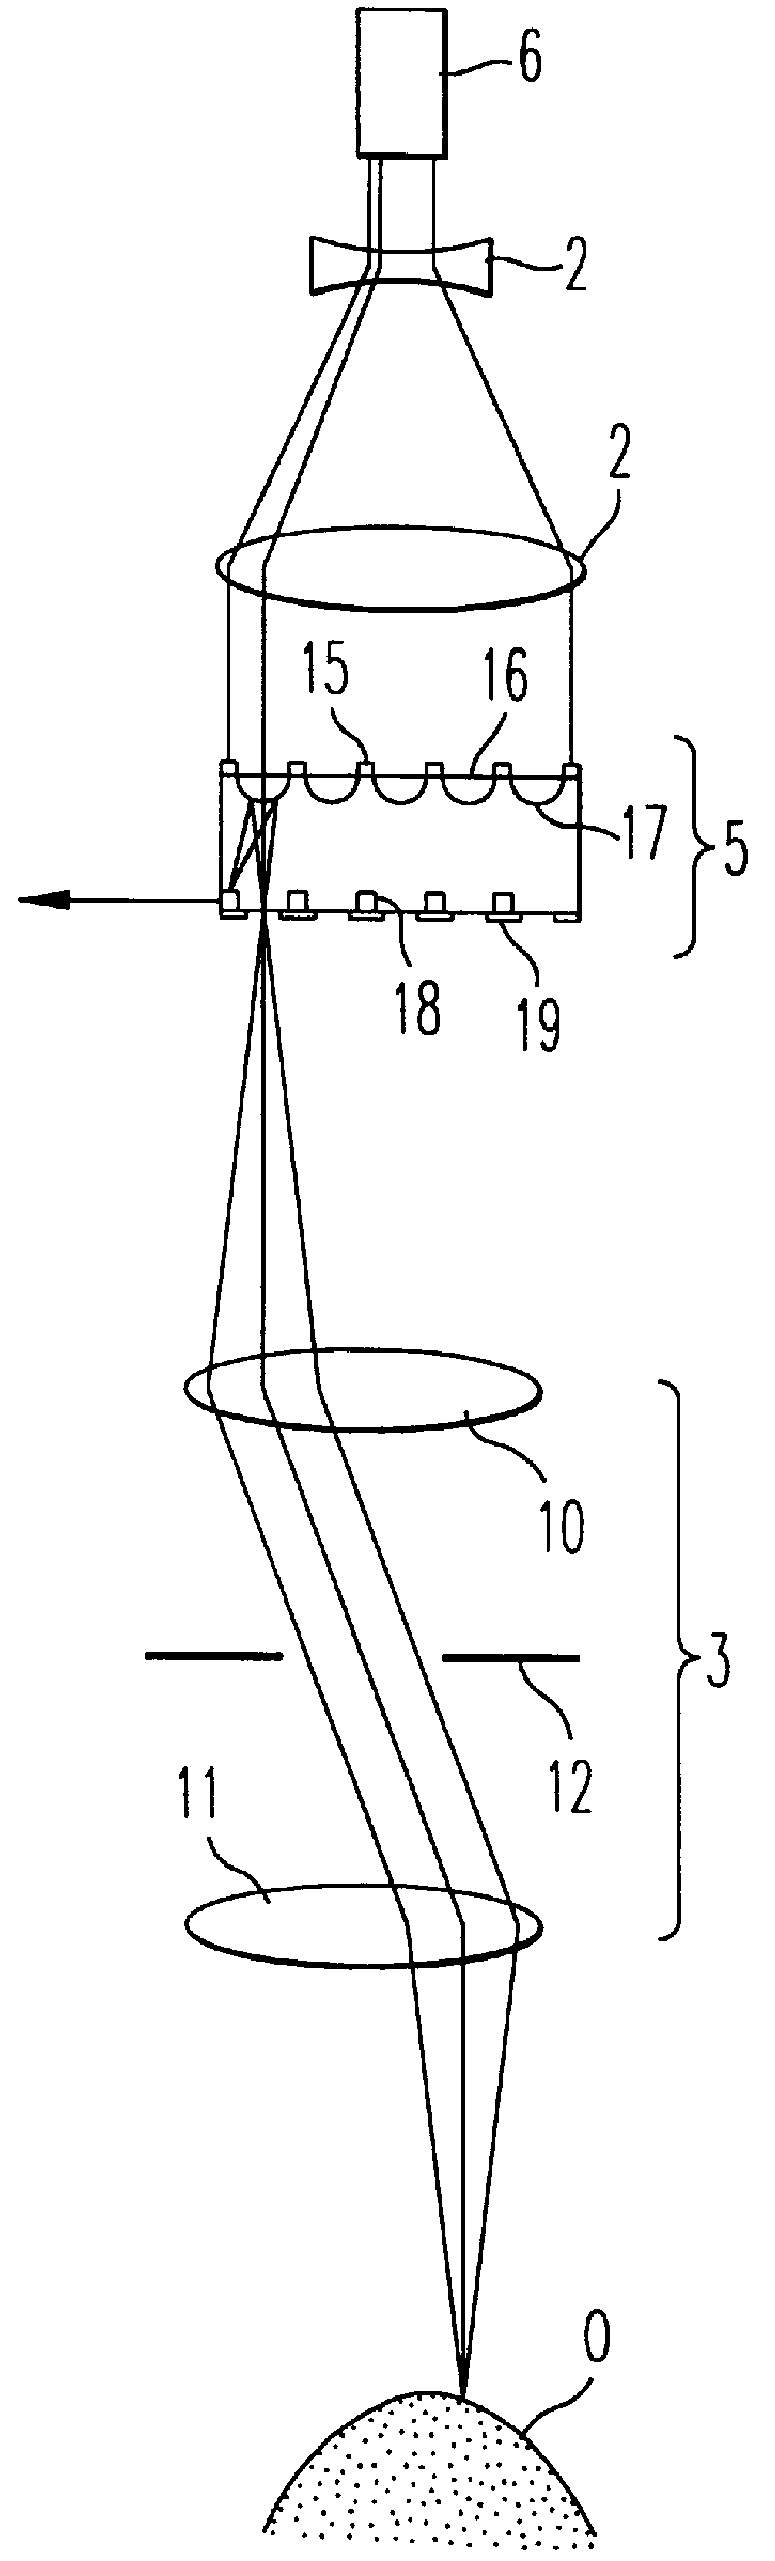 Three-dimensional shape measuring apparatus